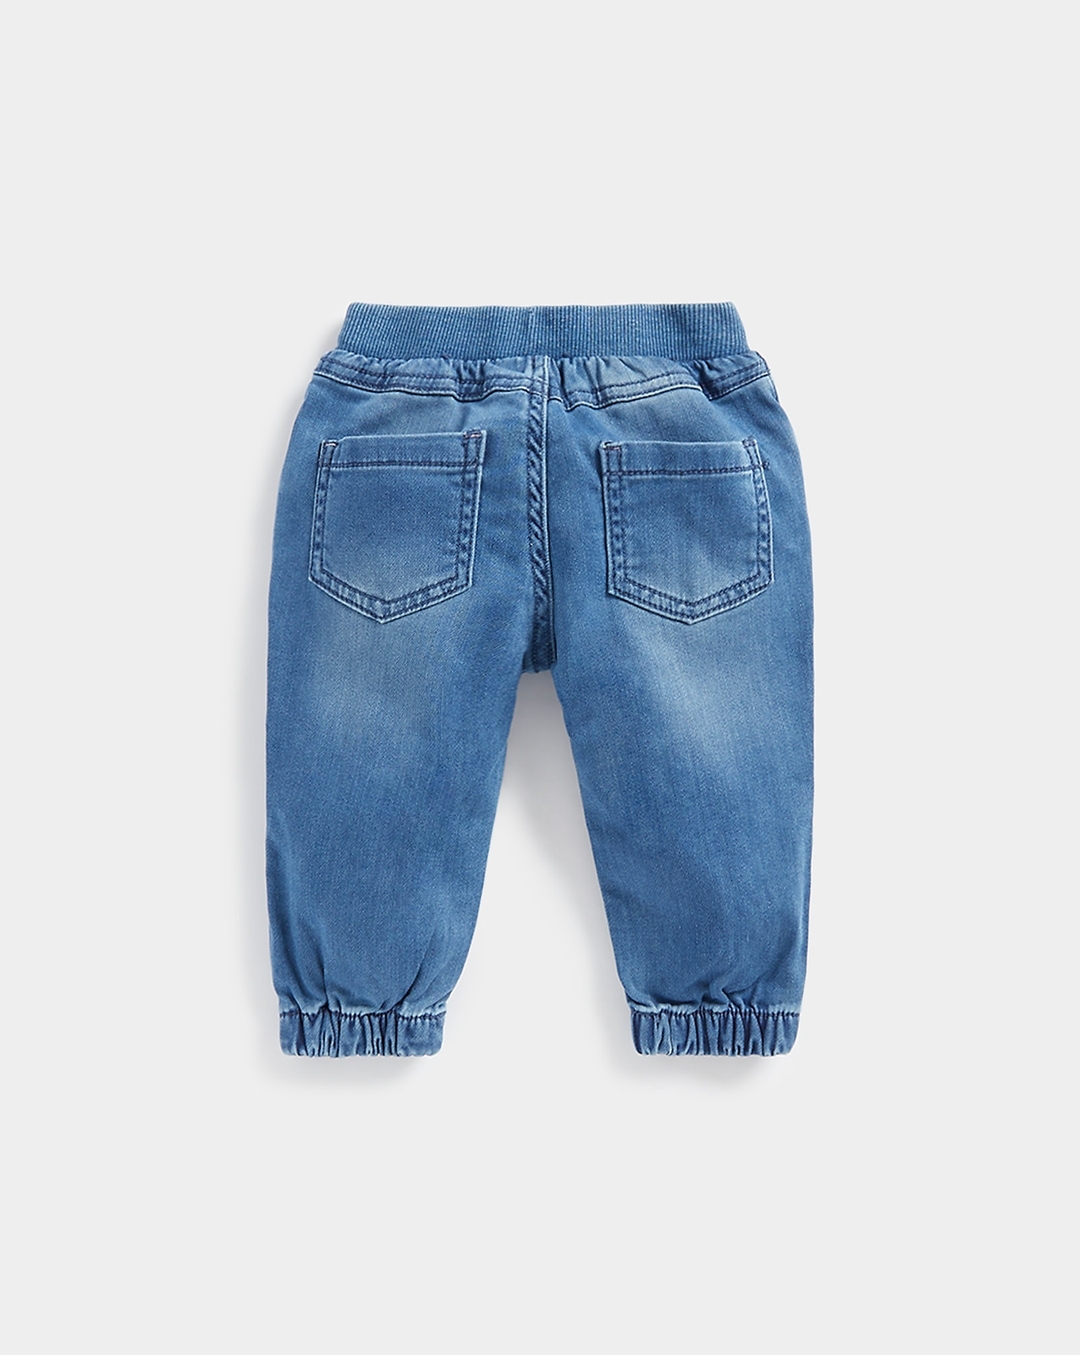 Buy Girls Jeans-Denim Online at Best Price